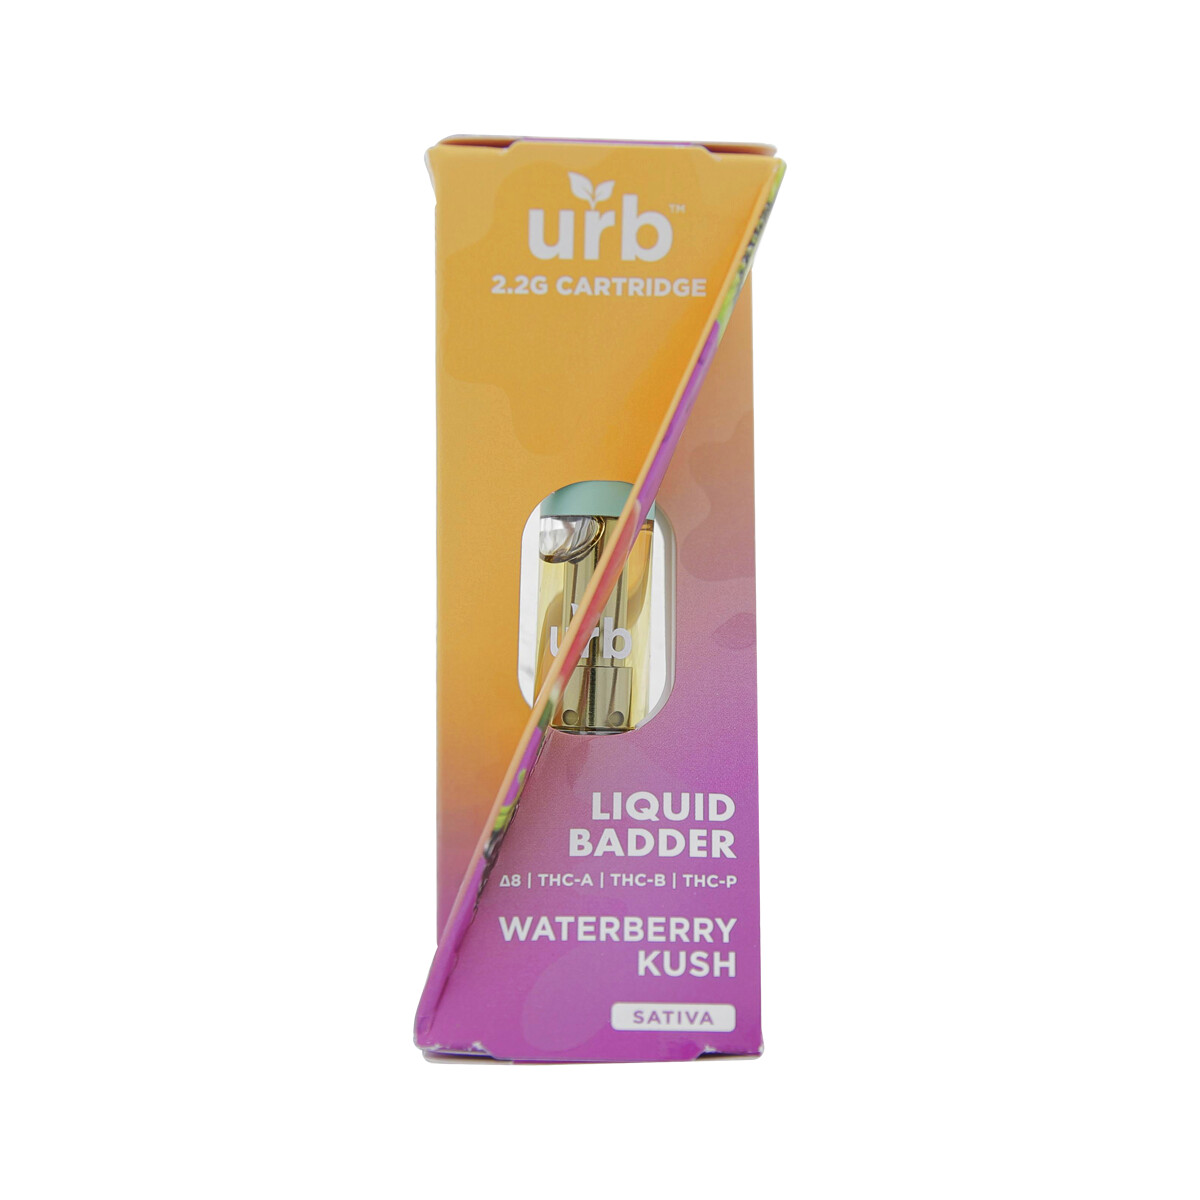 Urb Liquid Badder 2.2g Cartridge